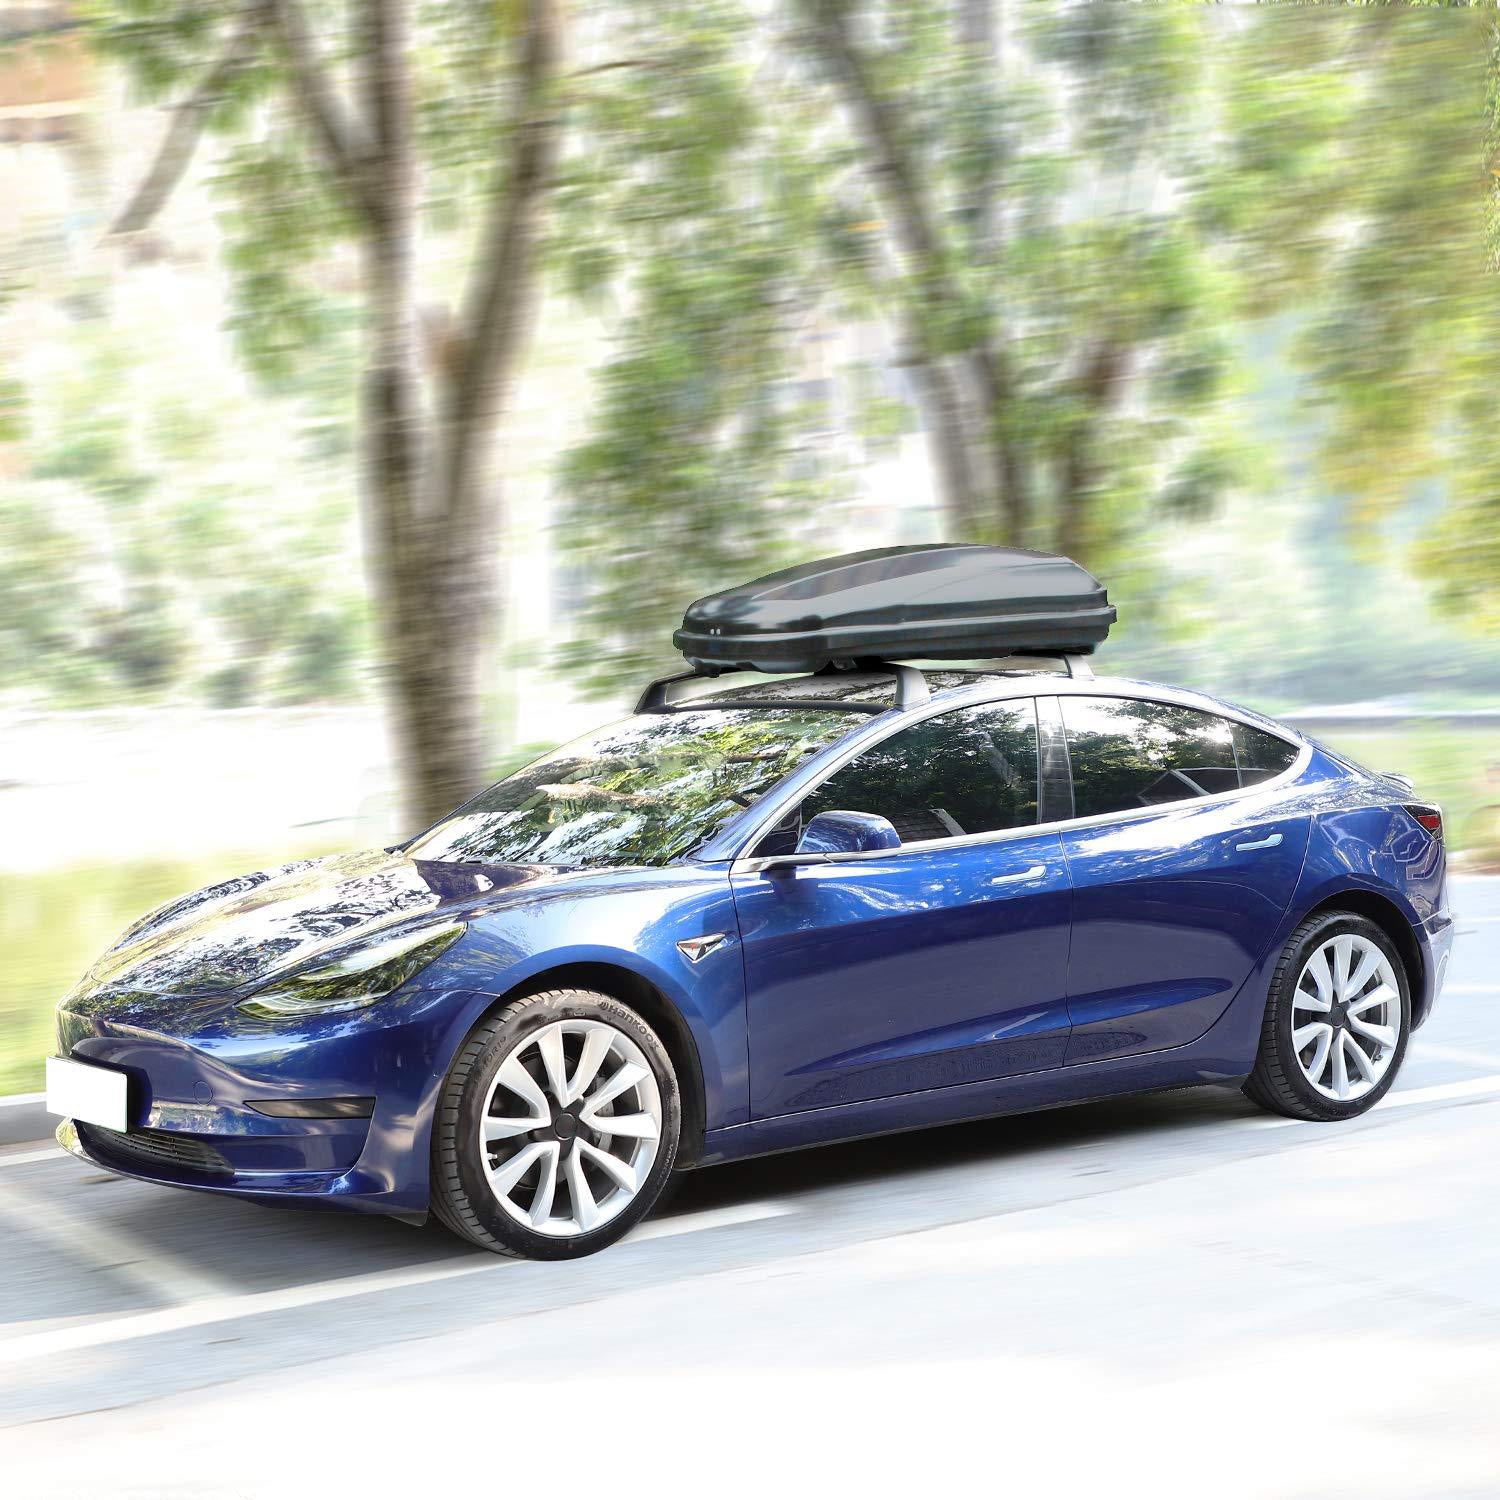 Barres de toit en aluminium pour Tesla Model 3